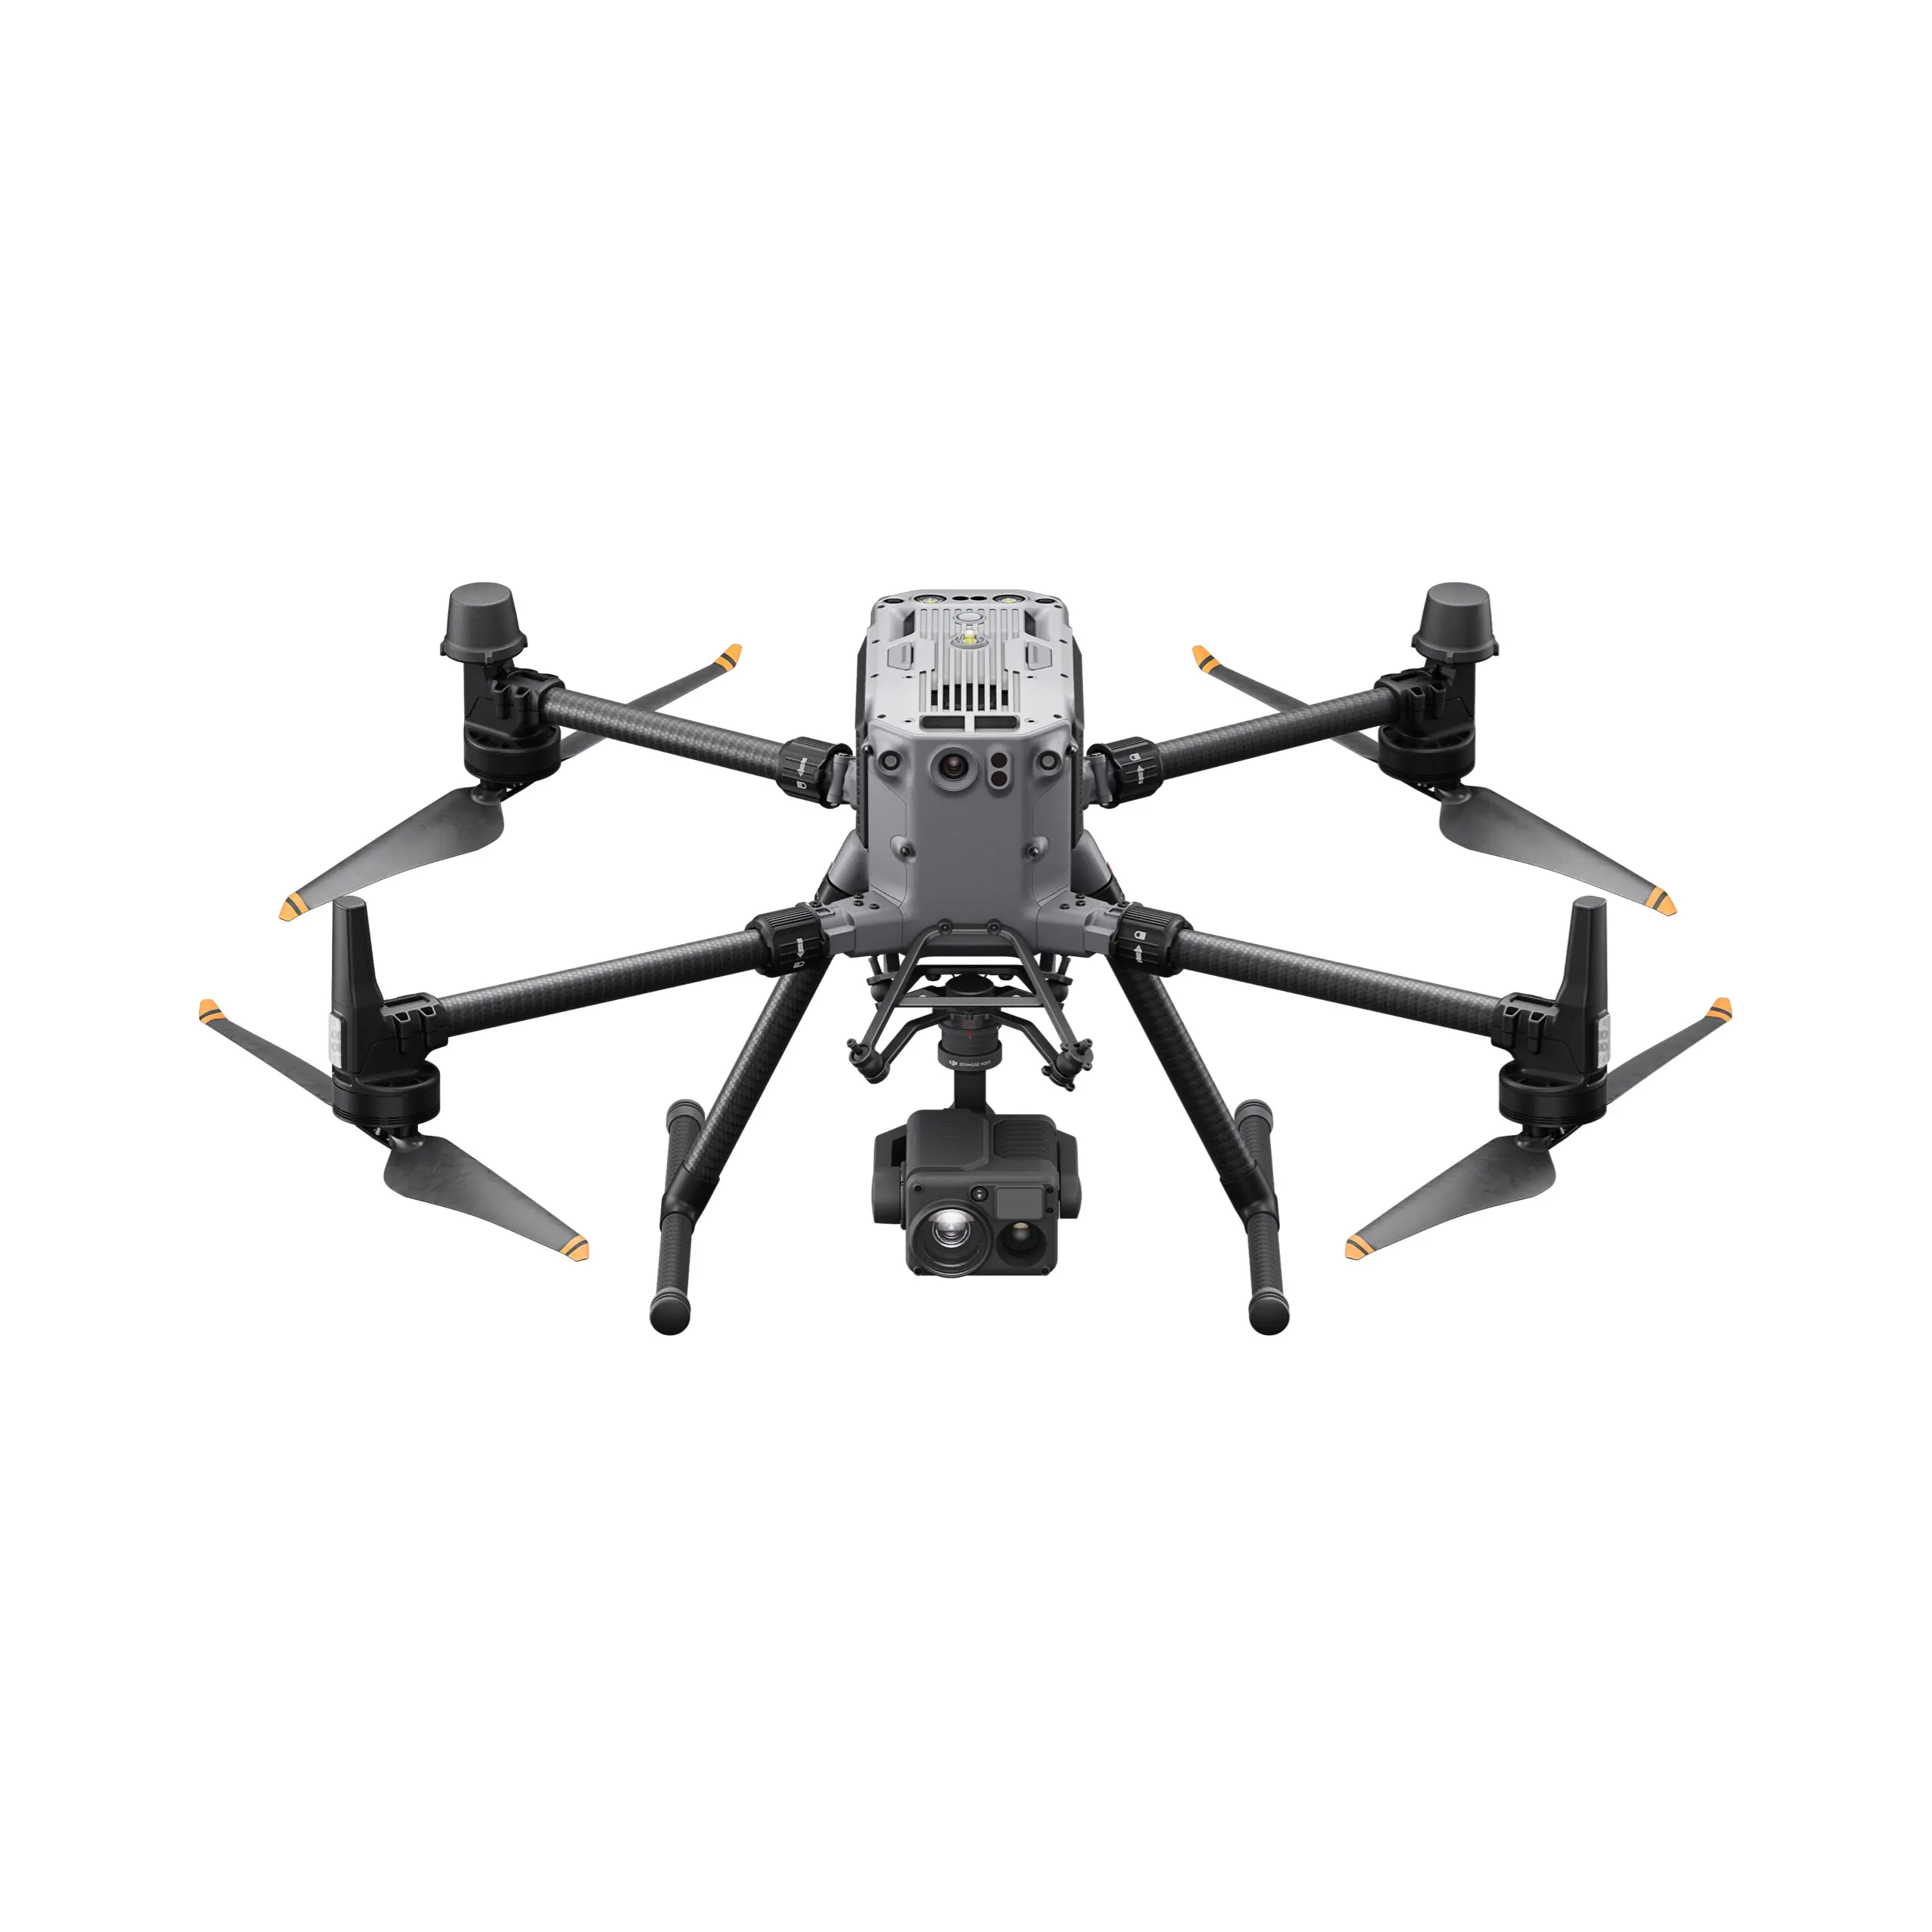 DJI Matrice 350 RTK senza preoccupazioni Combo DJI Drone di base con telecamera FPV per visione notturna 55 minuti di volo M350 droni DJI